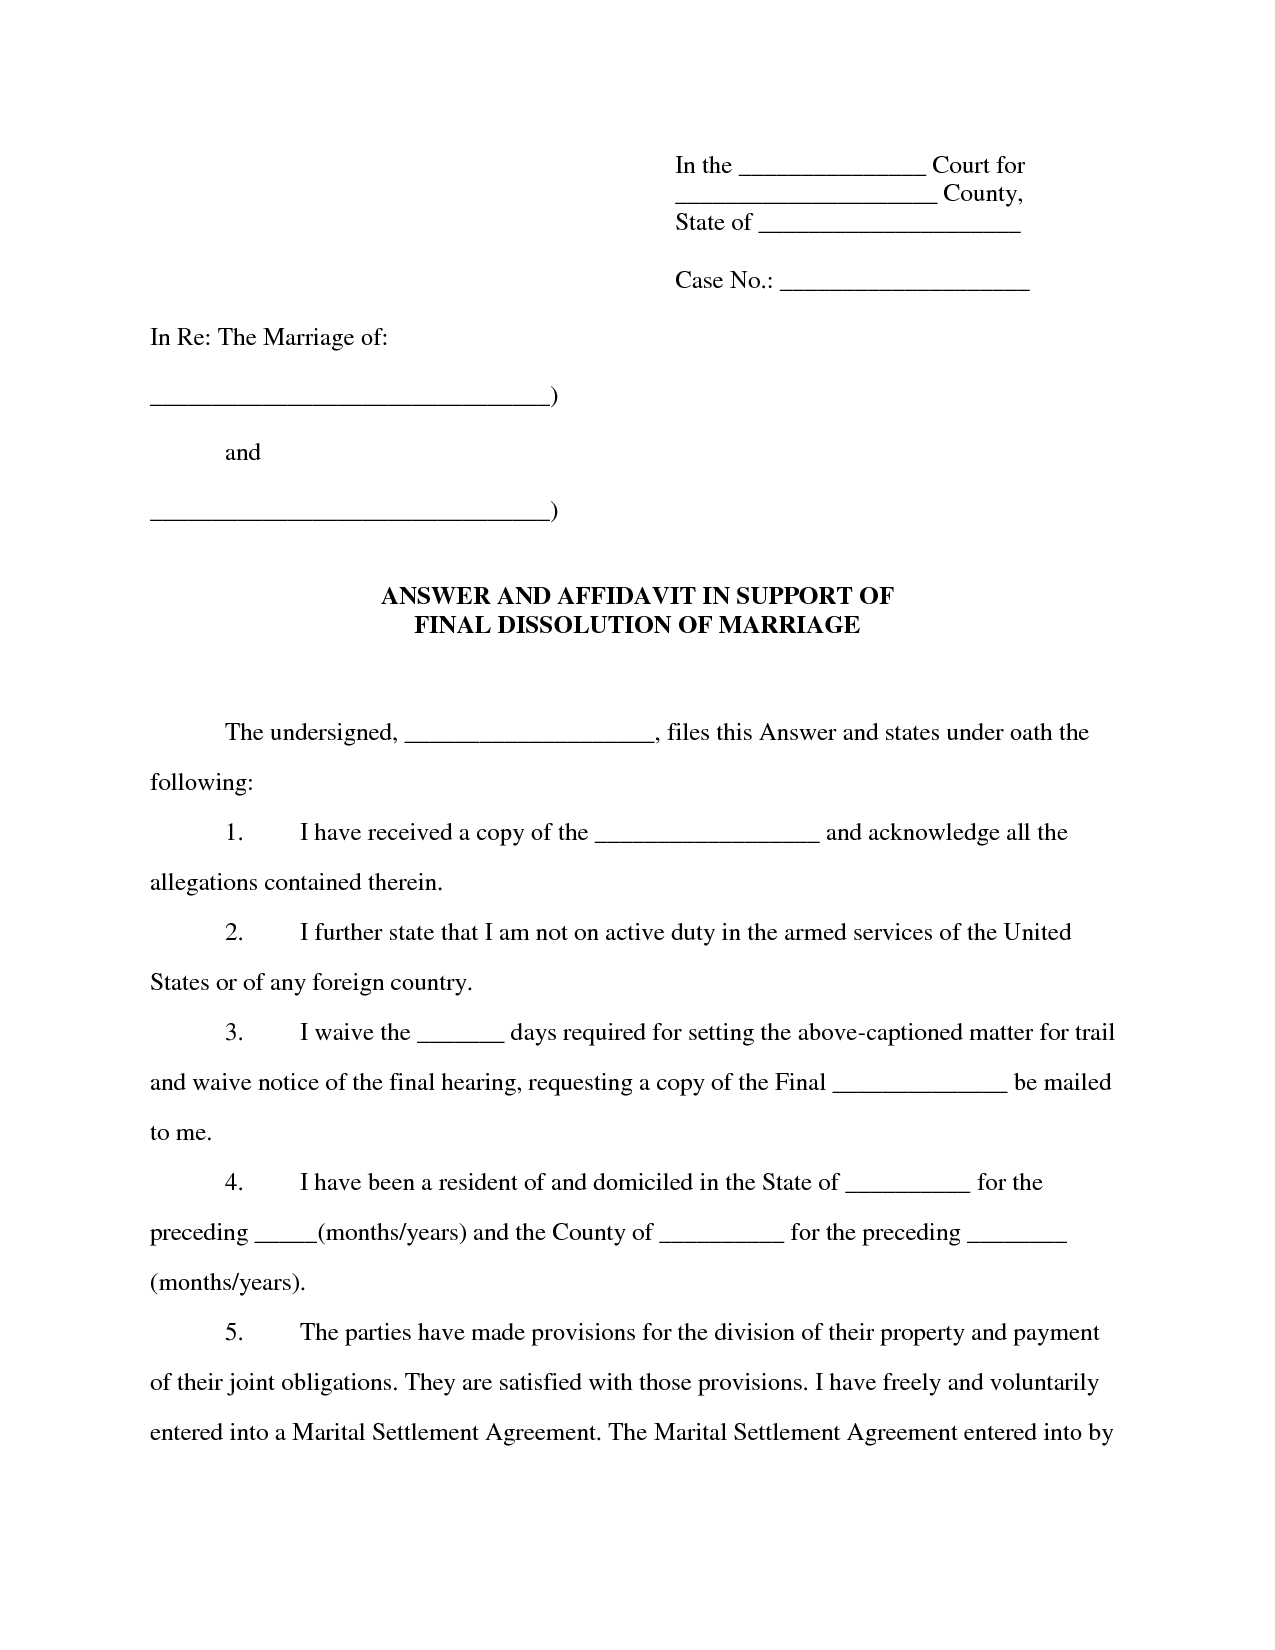 marriage-affidavit-template-free-printable-documents